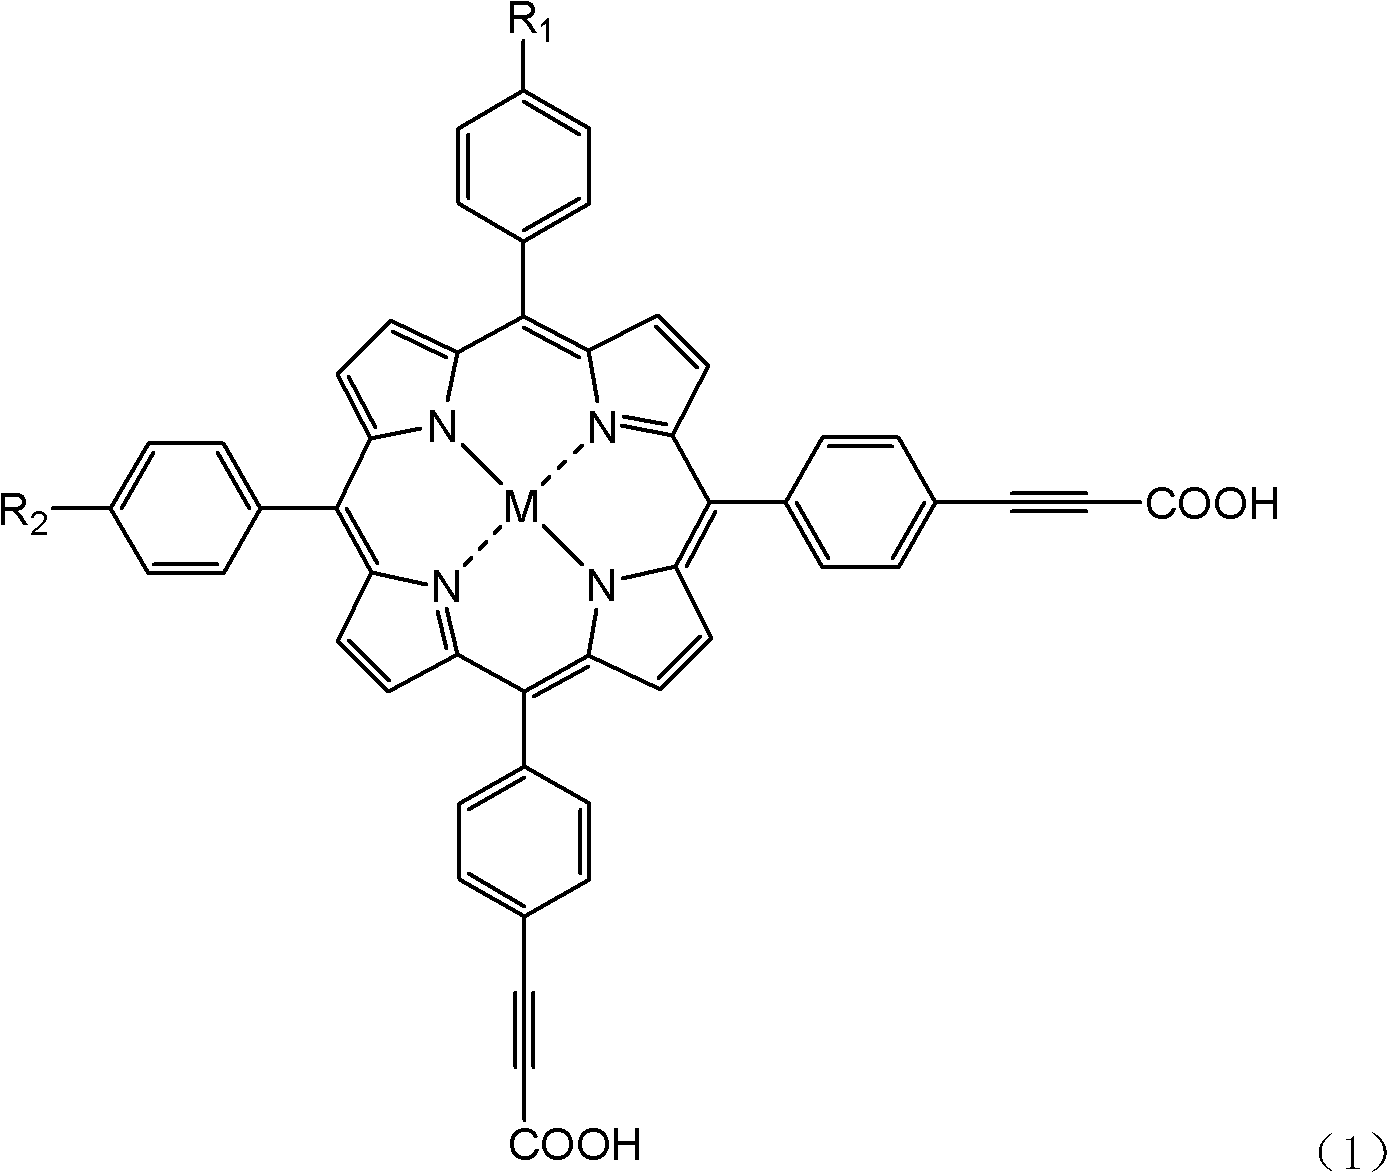 Asymmetrical dye molecule adopting tetraphenylporphin as core, and preparation method thereof